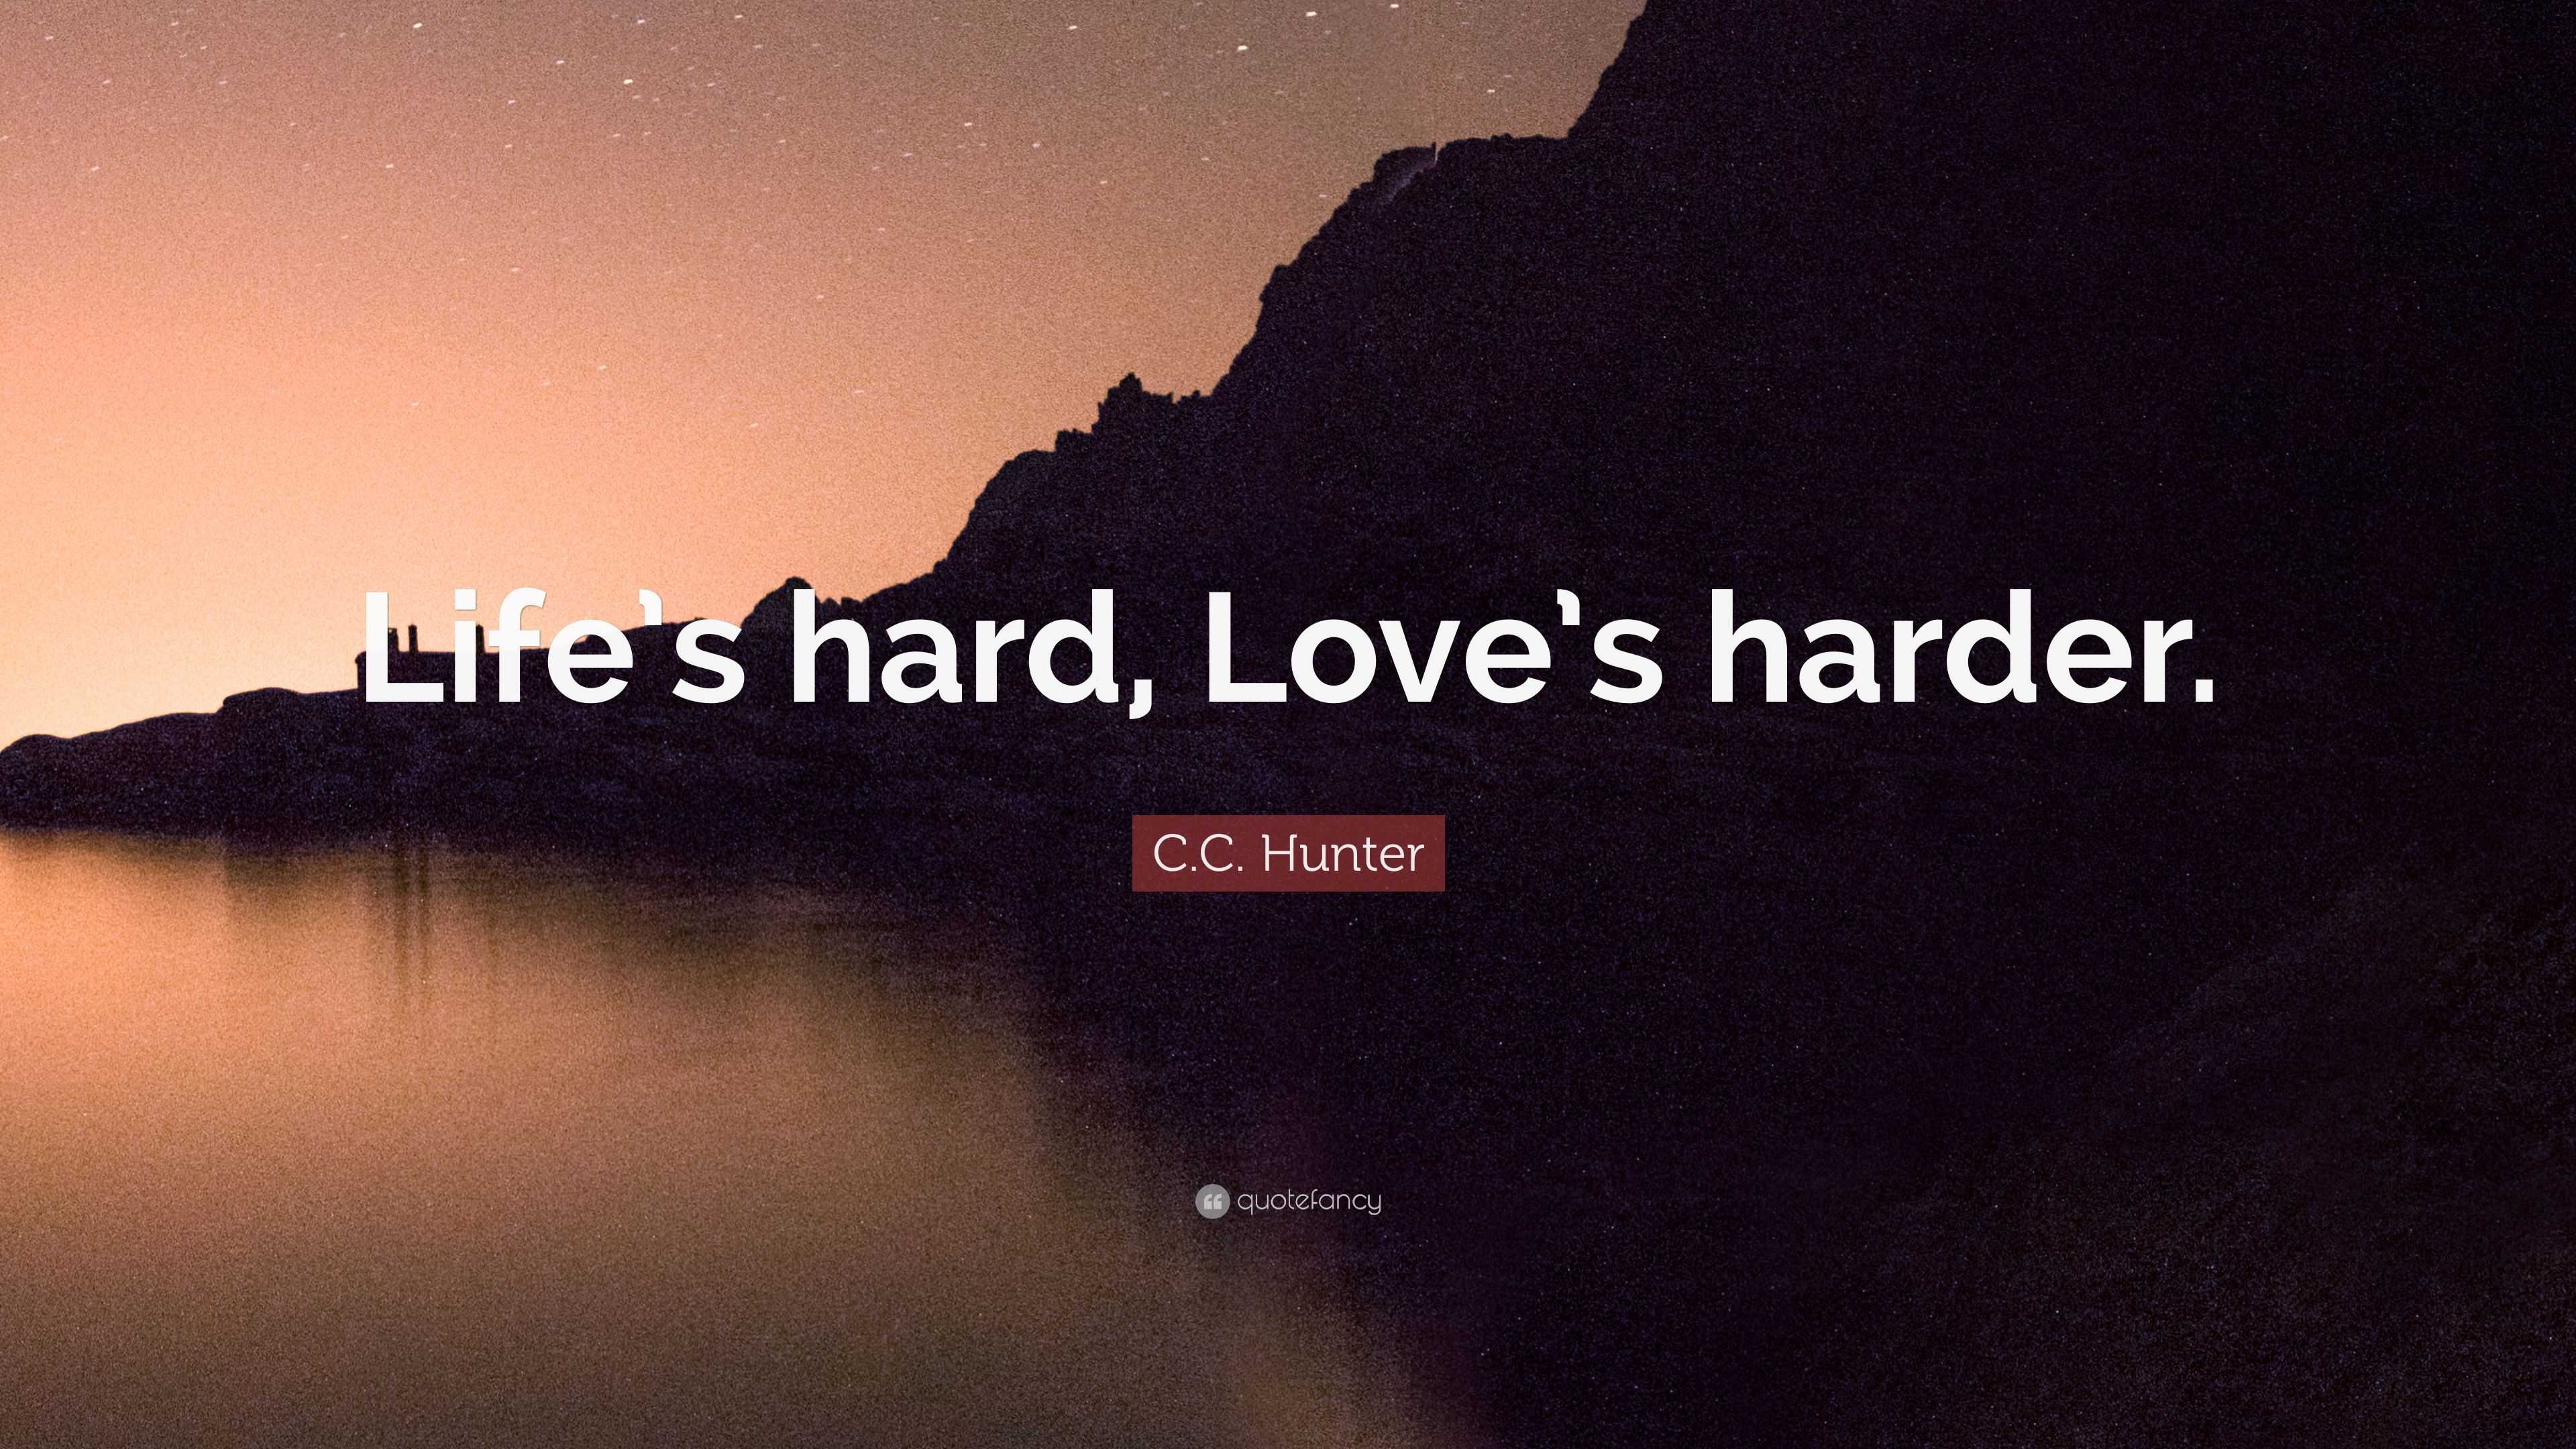 C C Hunter Quote “Life s hard Love s harder ”